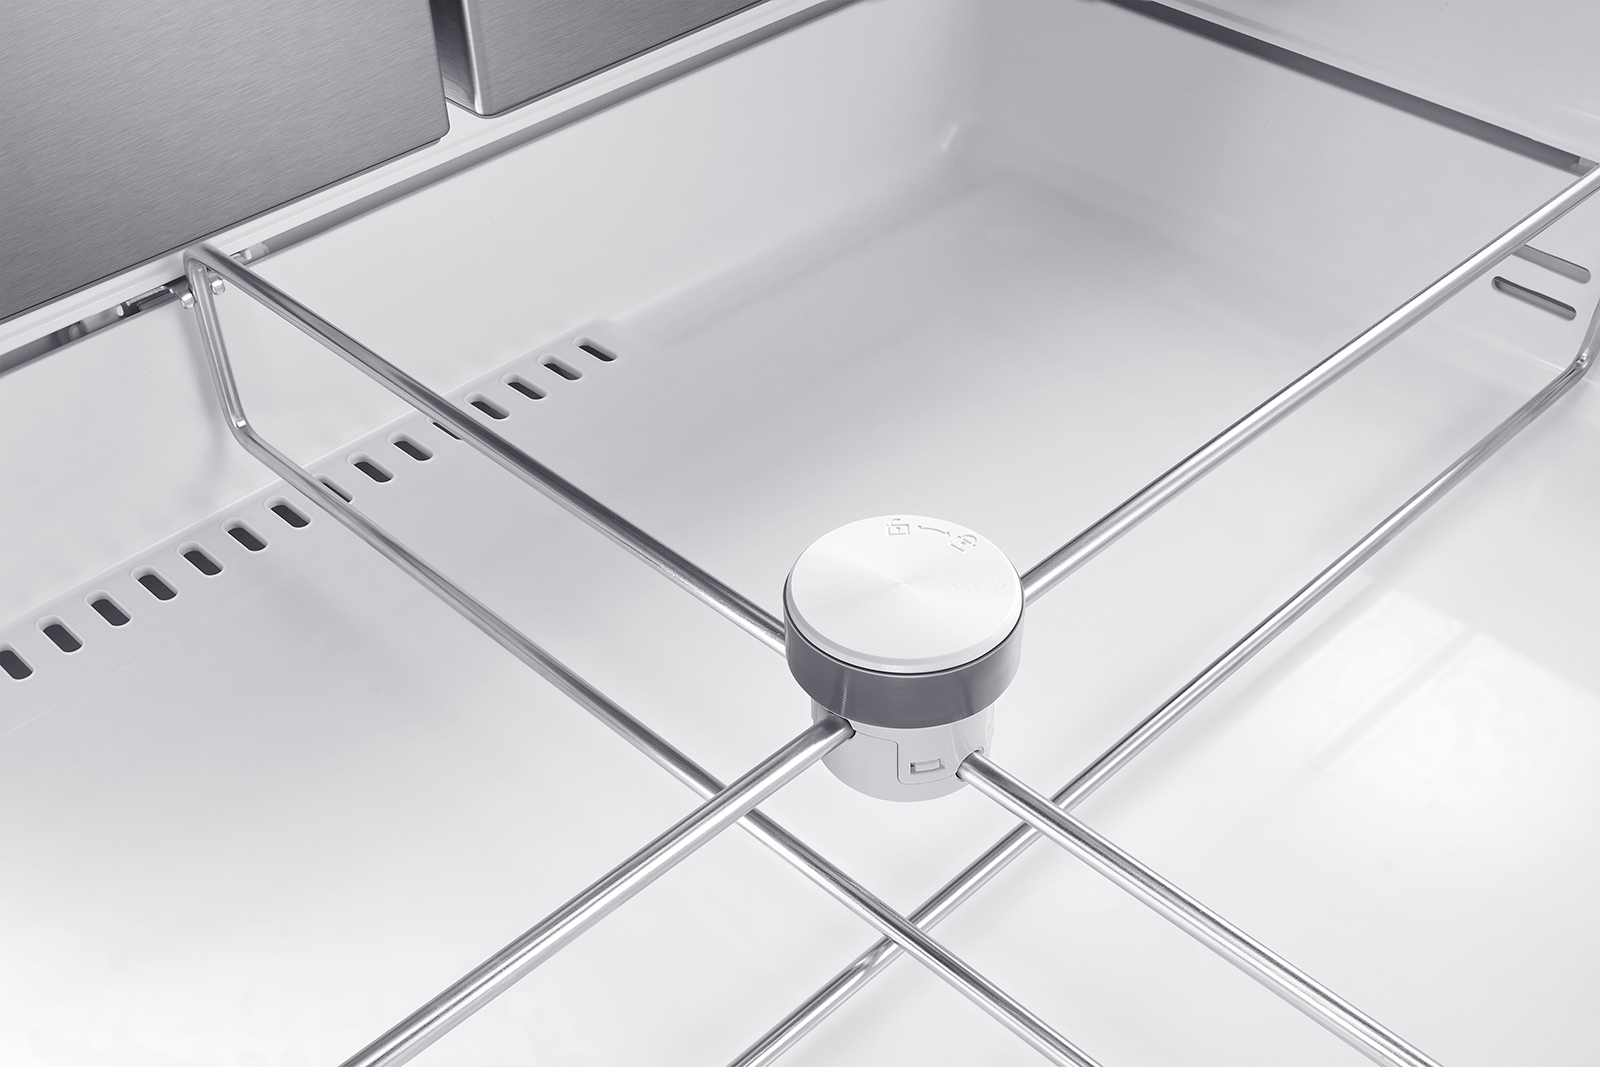 Samsung 28 Cu. ft. French Door Refrigerator - Stainless Steel